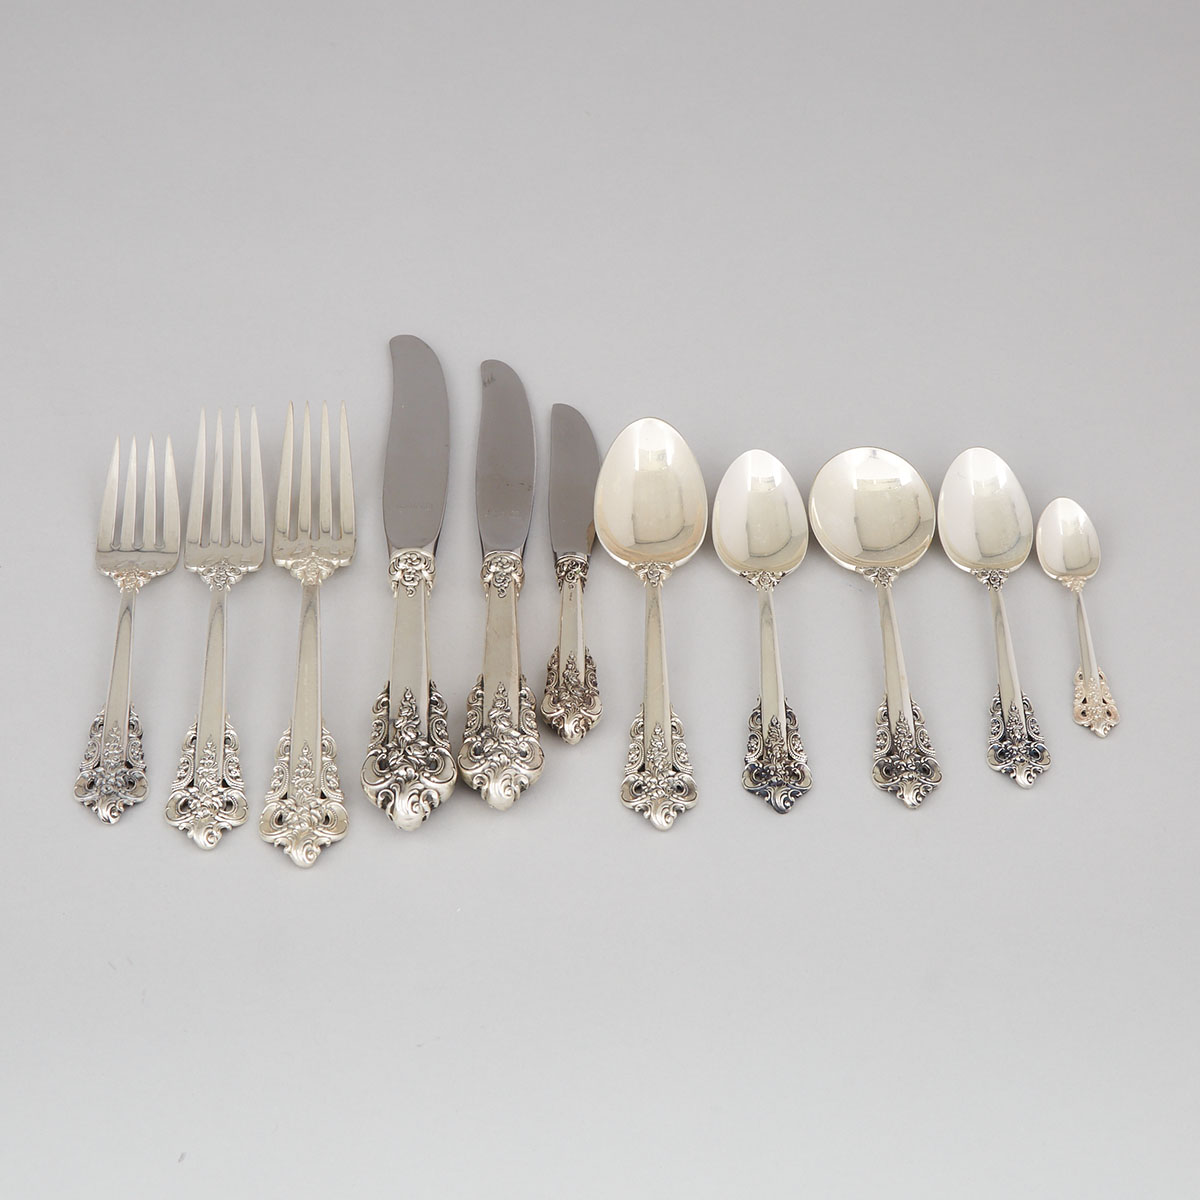 American Silver ‘Grande Baroque’ Pattern Flatware, Wallace Silversmiths, Wallingford, Ct., 20th century